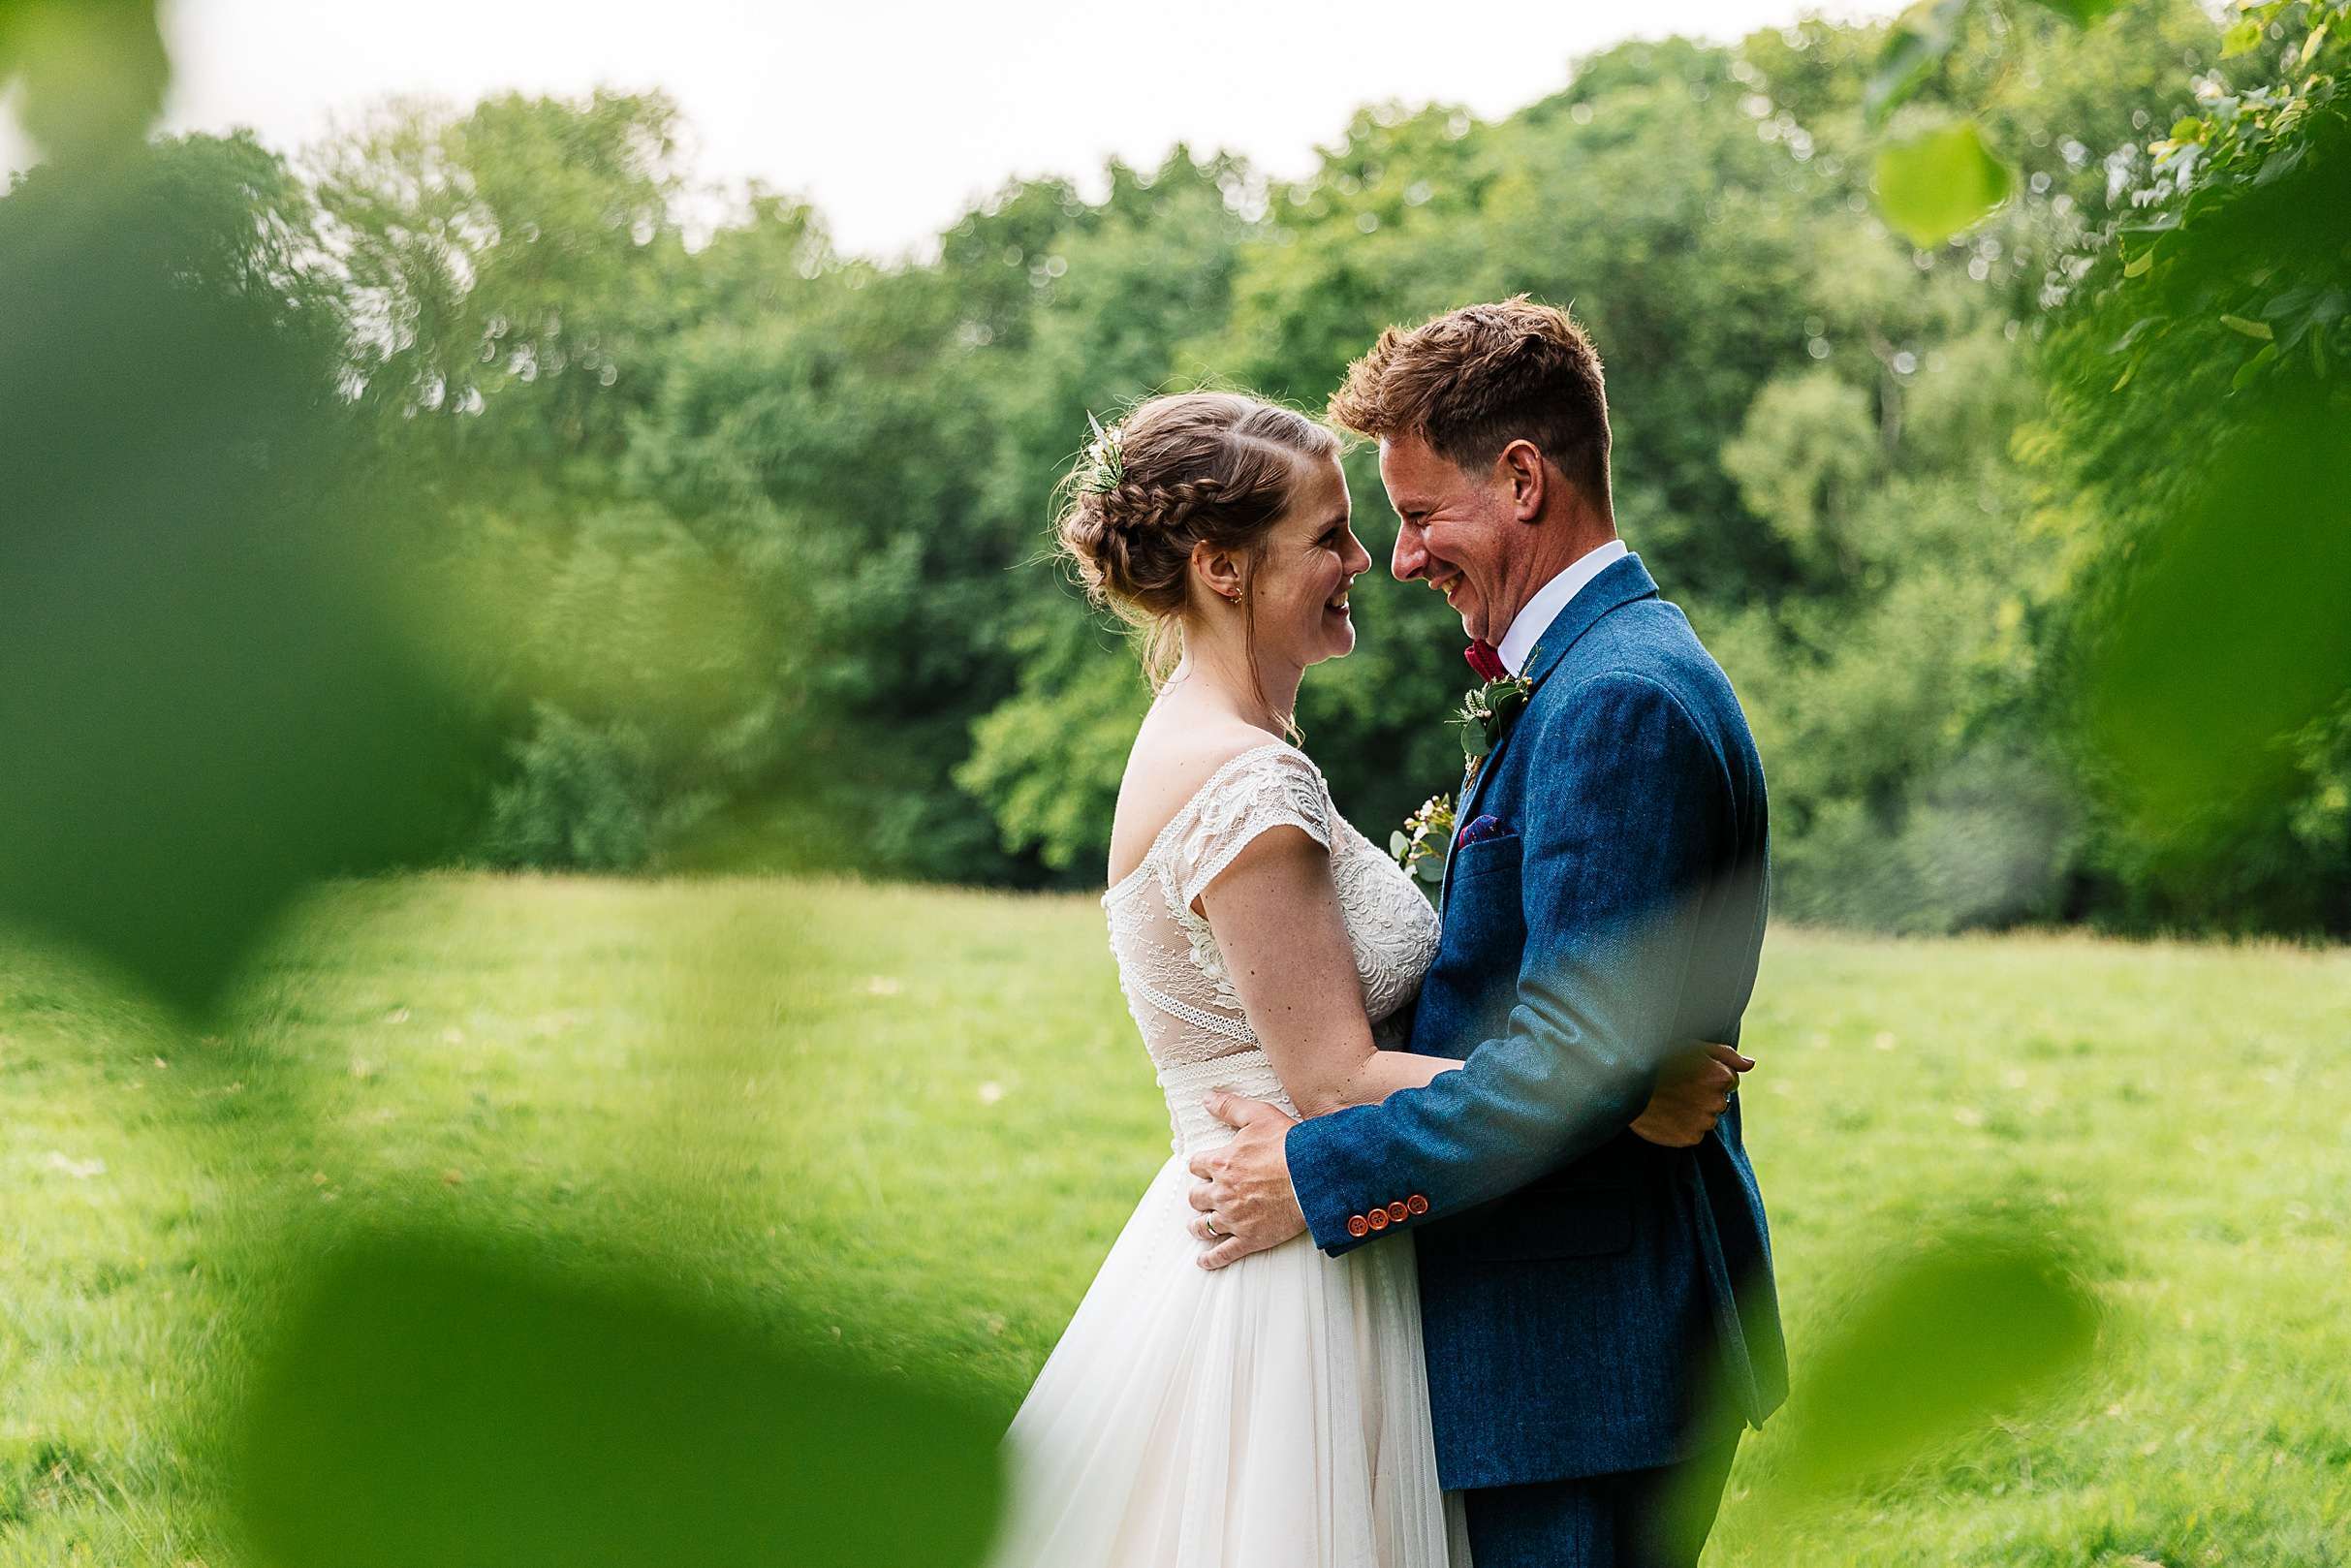 Montague Farm wedding - Lucy & Kieron